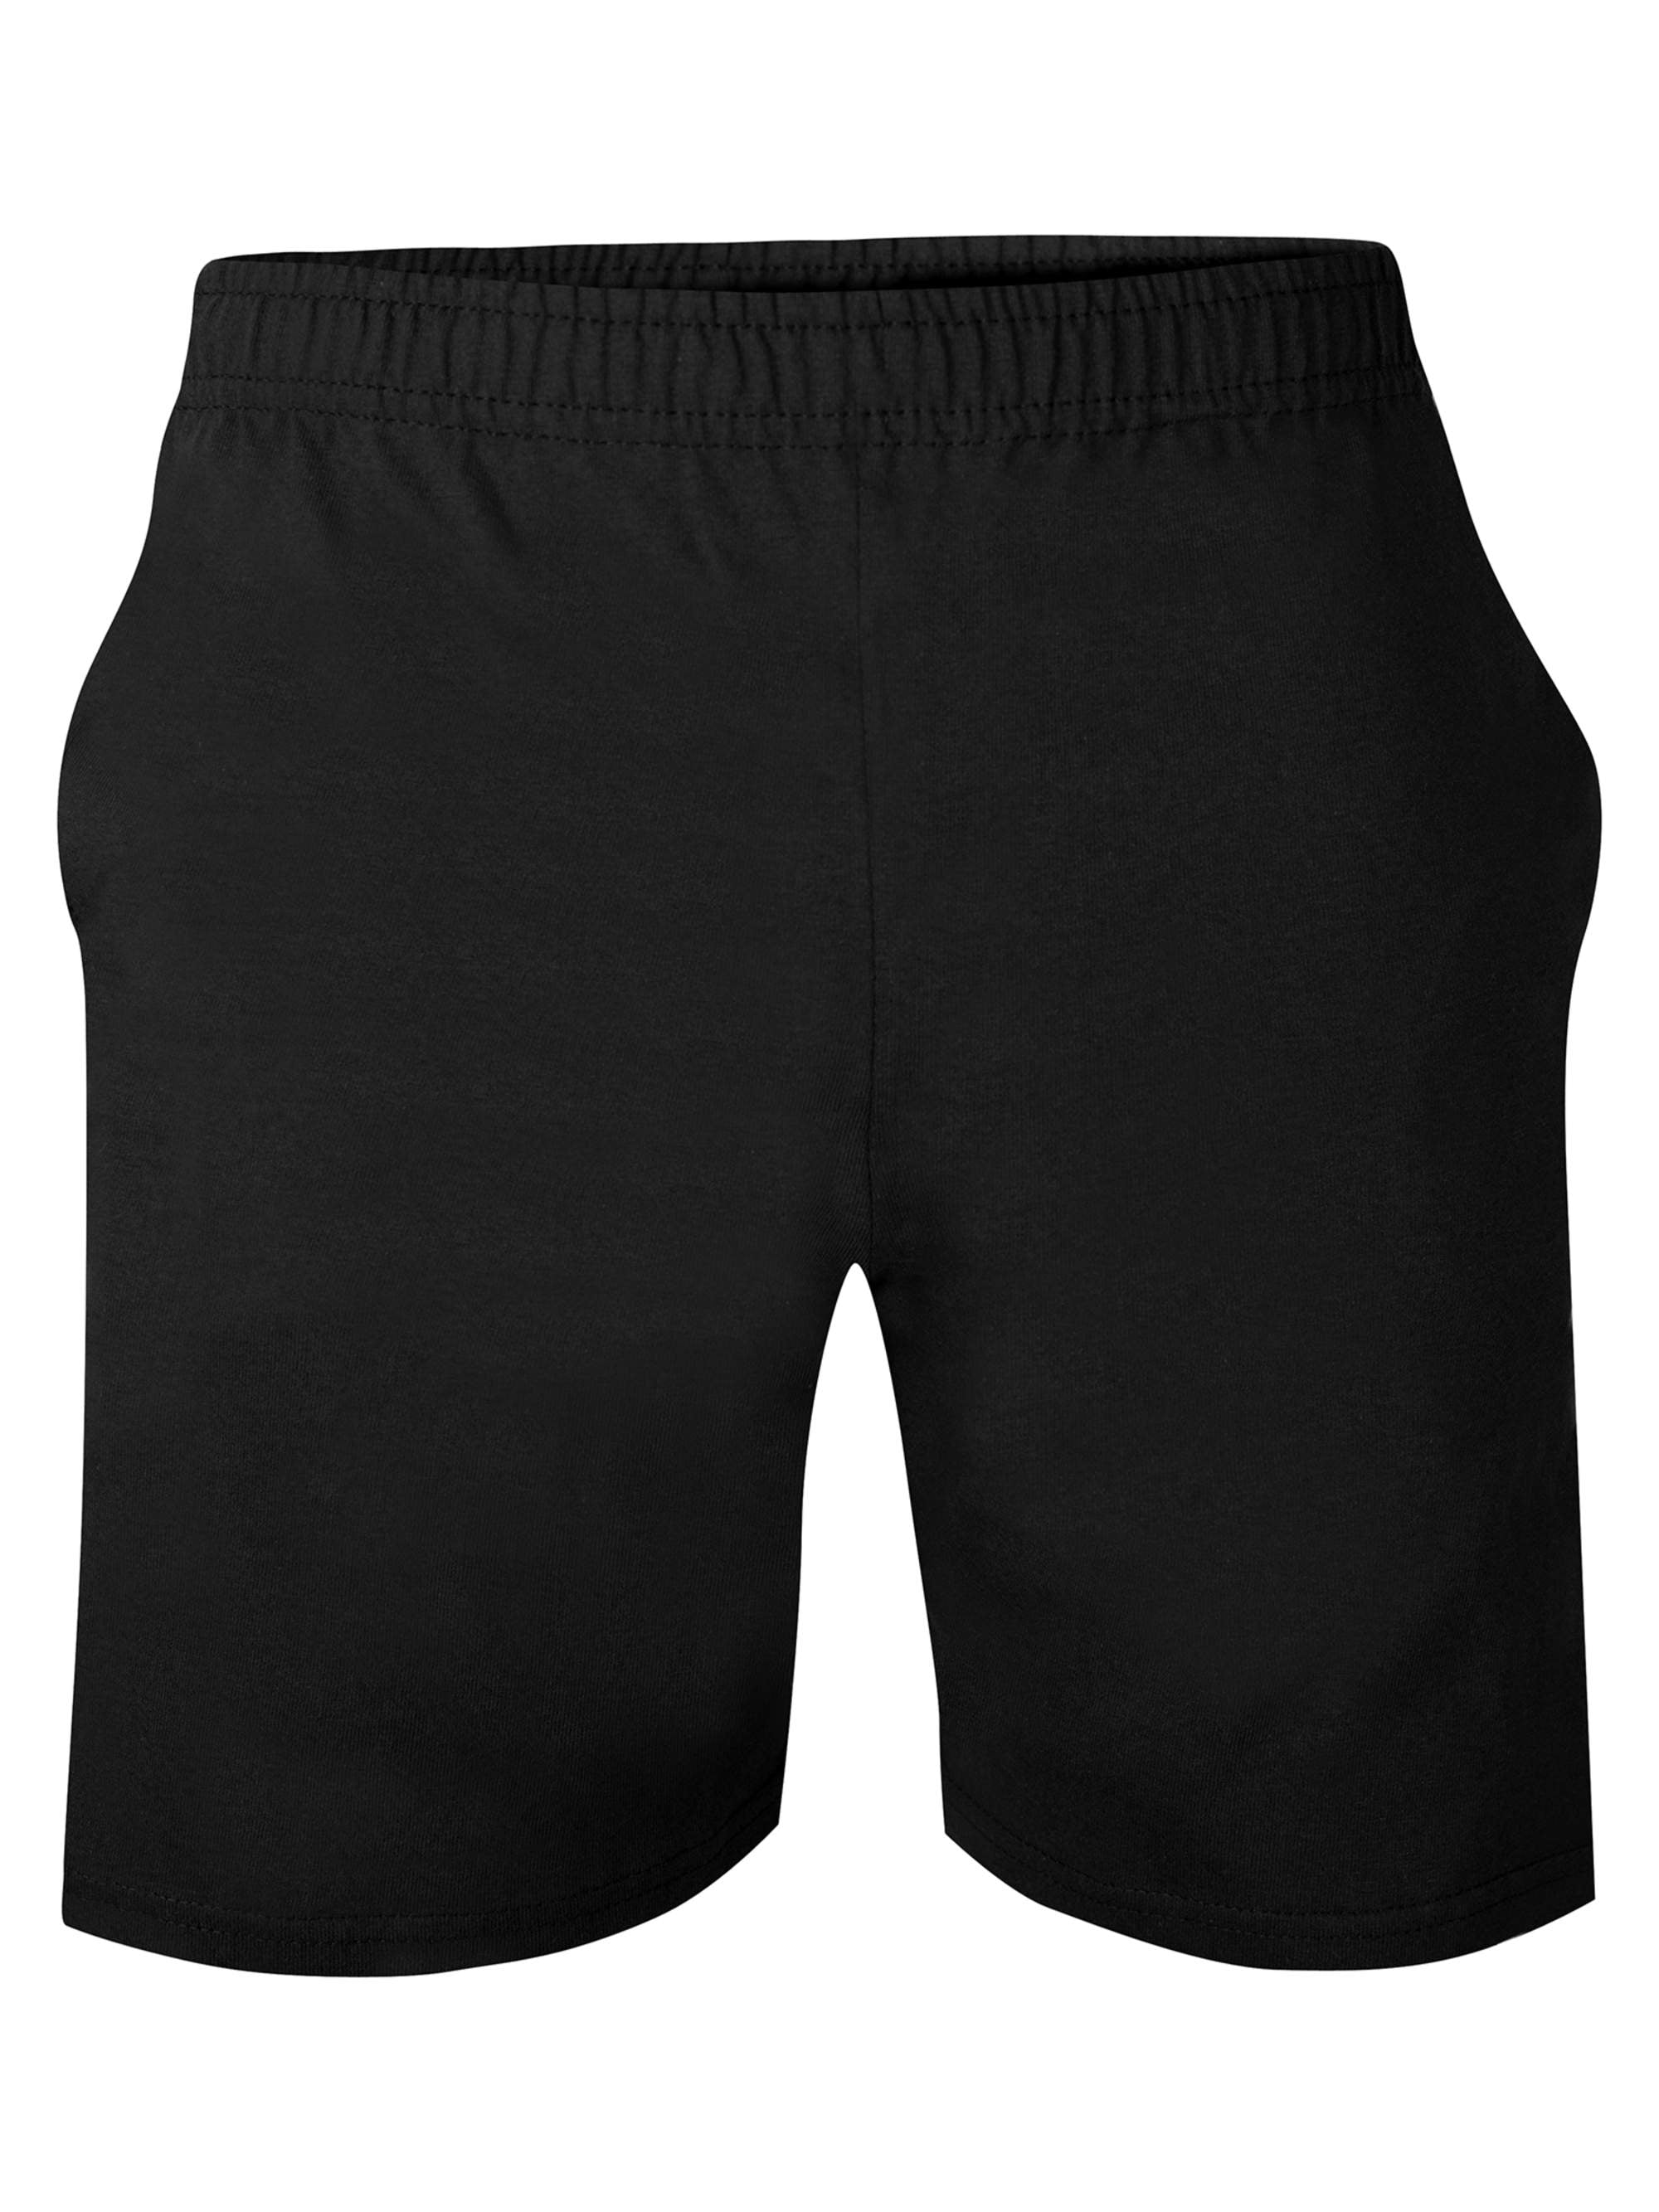 boys black jersey shorts